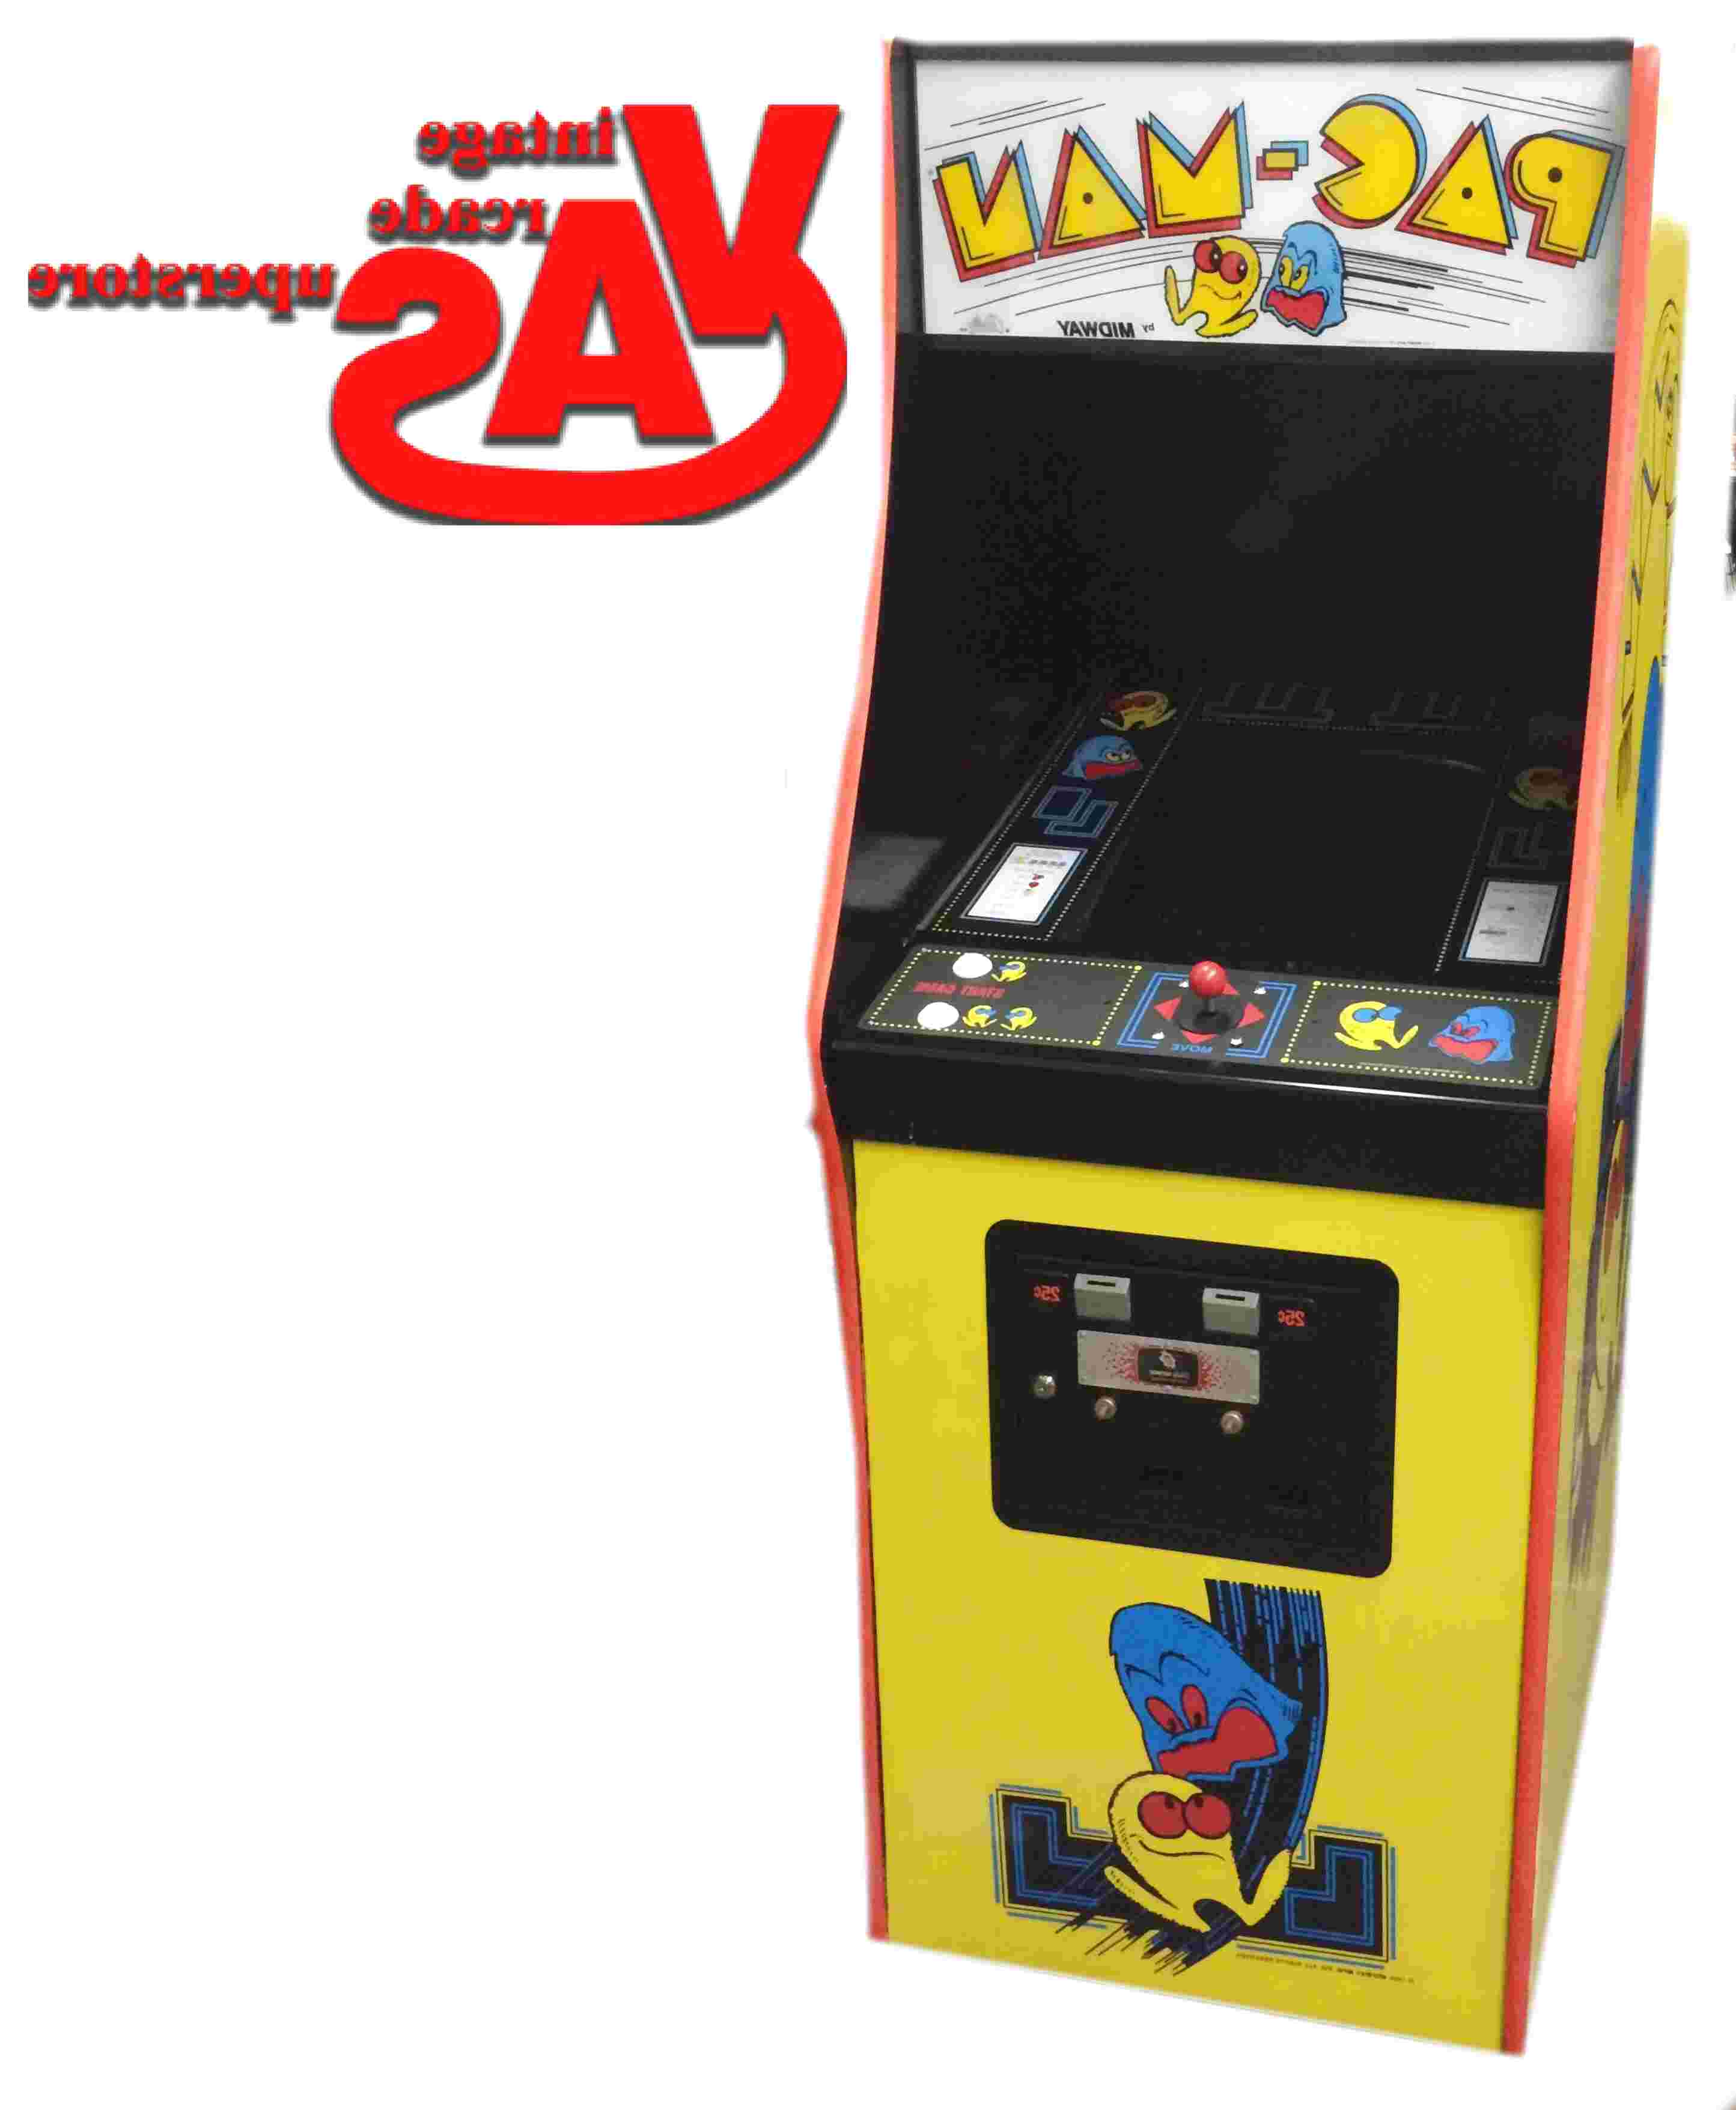 Original Arcade Machine for sale in UK | View 17 bargains